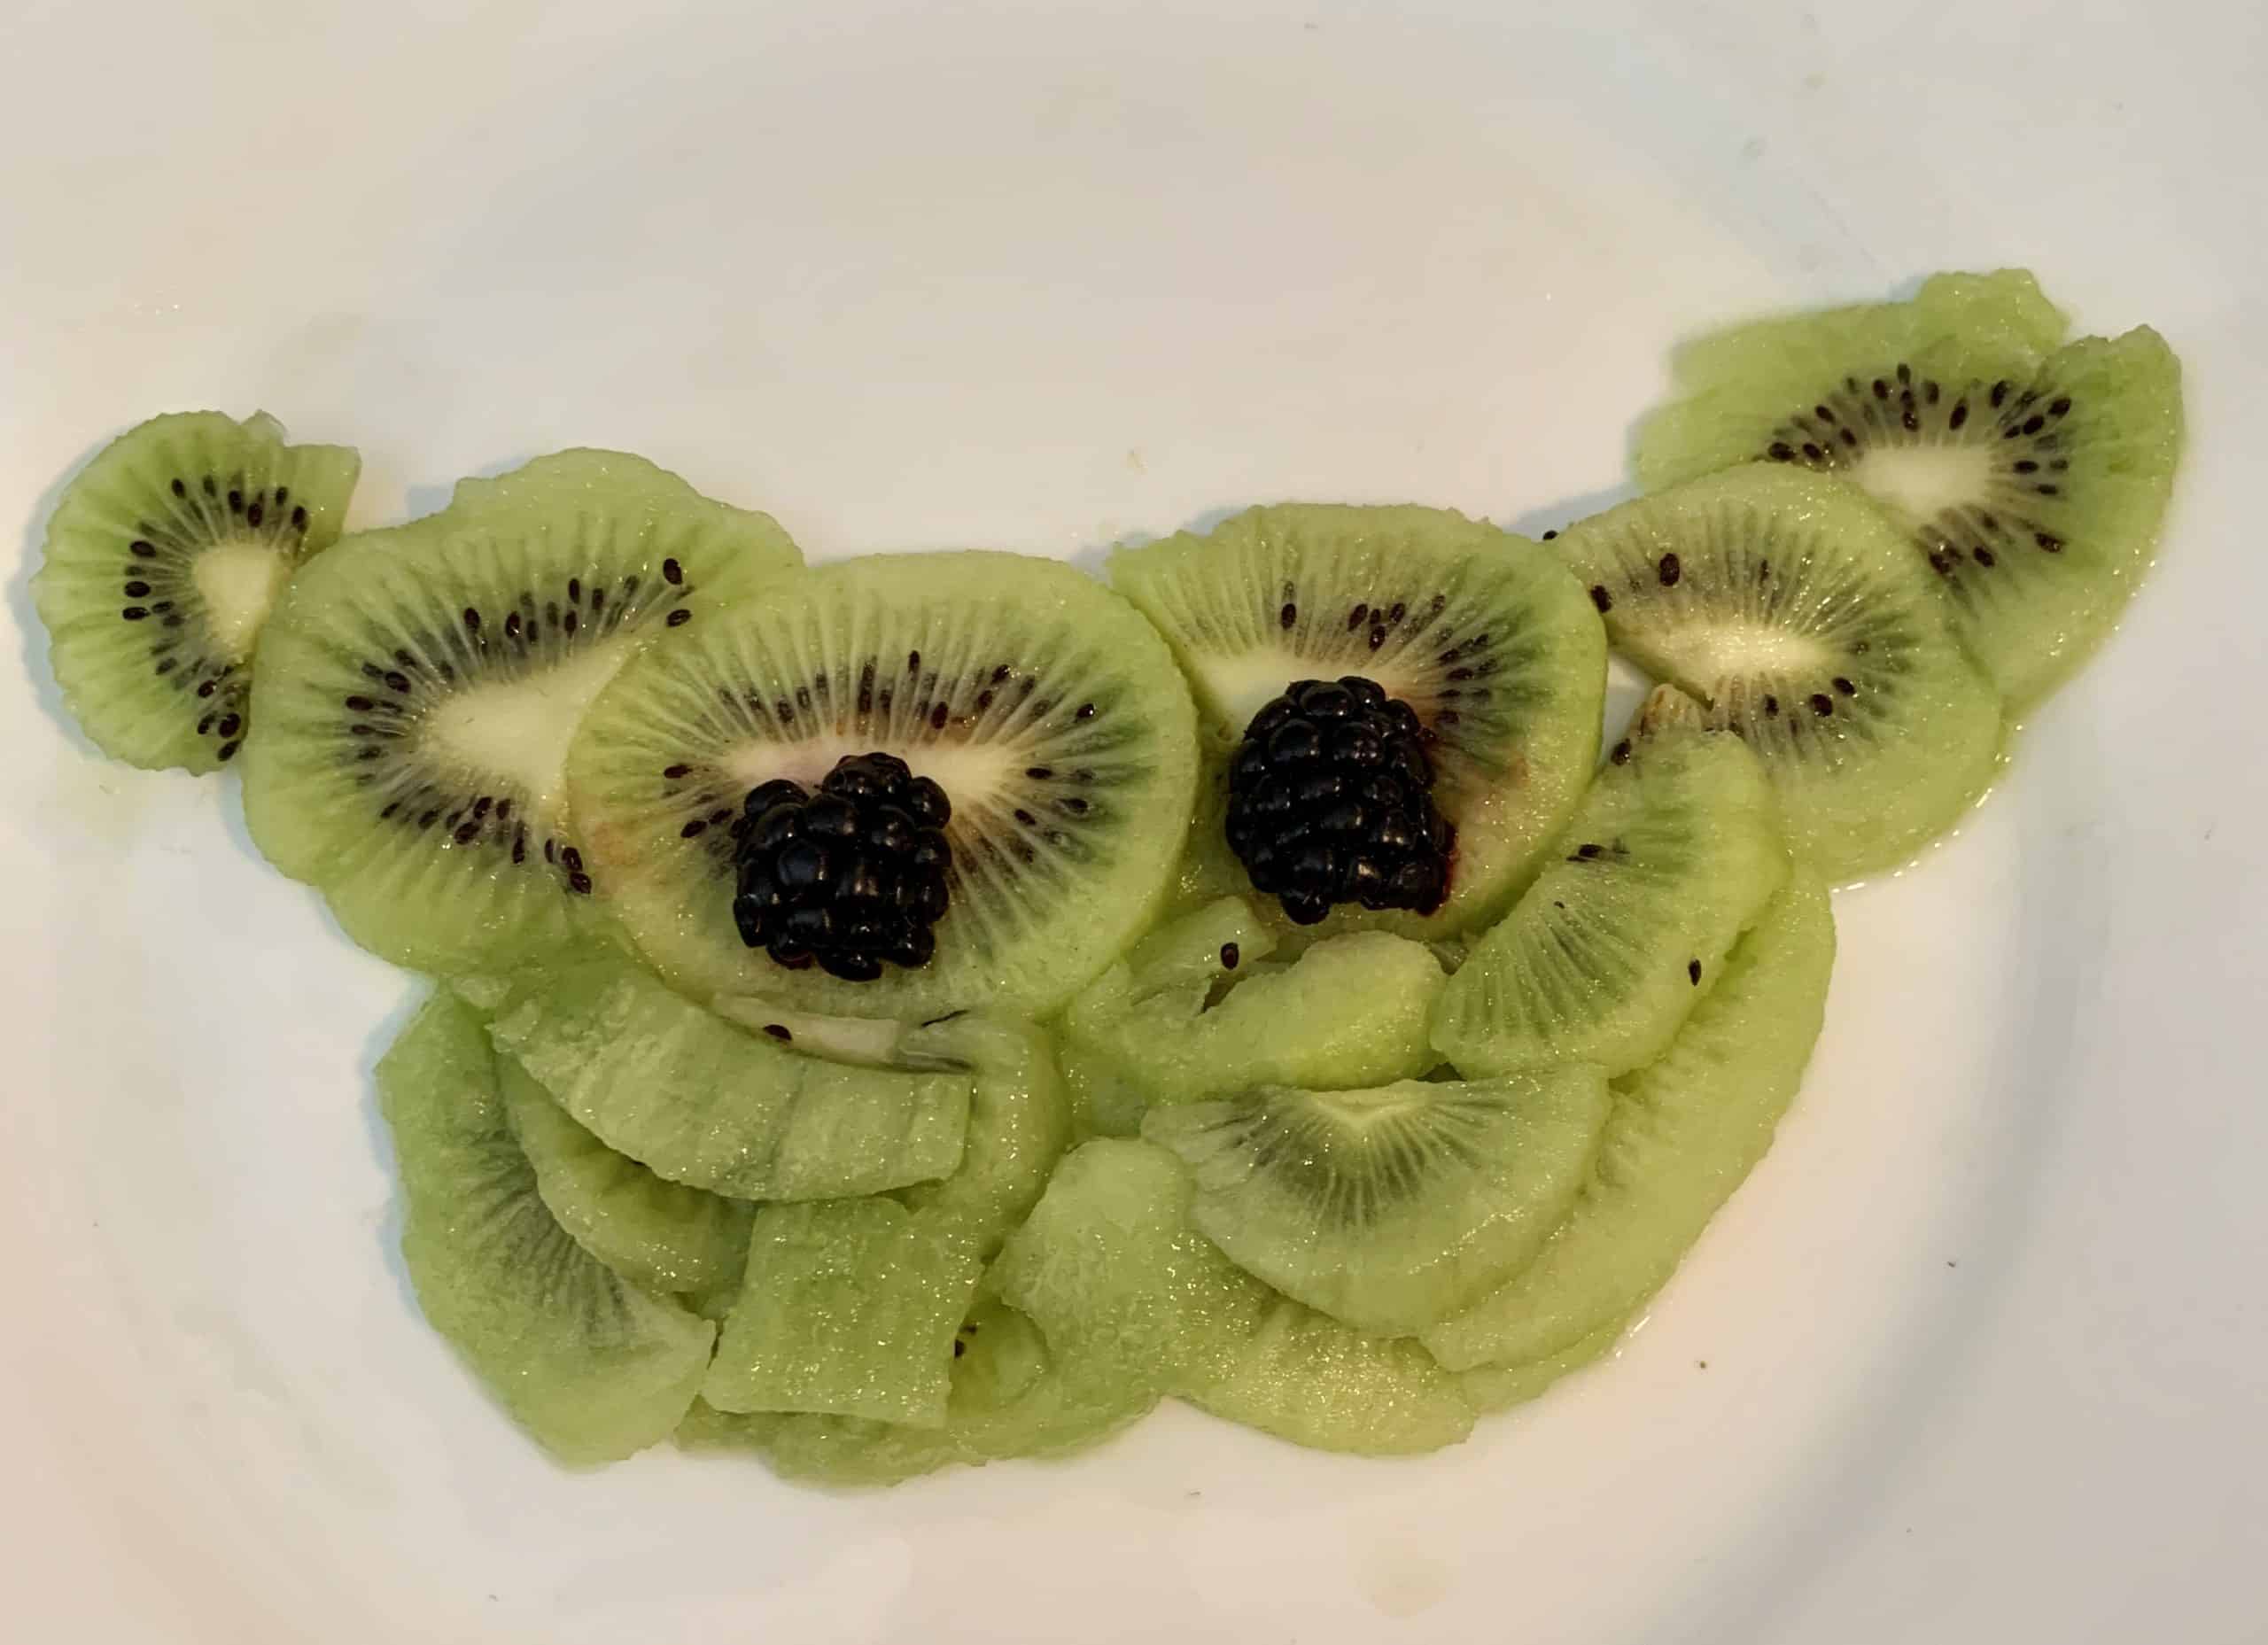 kiwi and blackberries make a baby yoda face